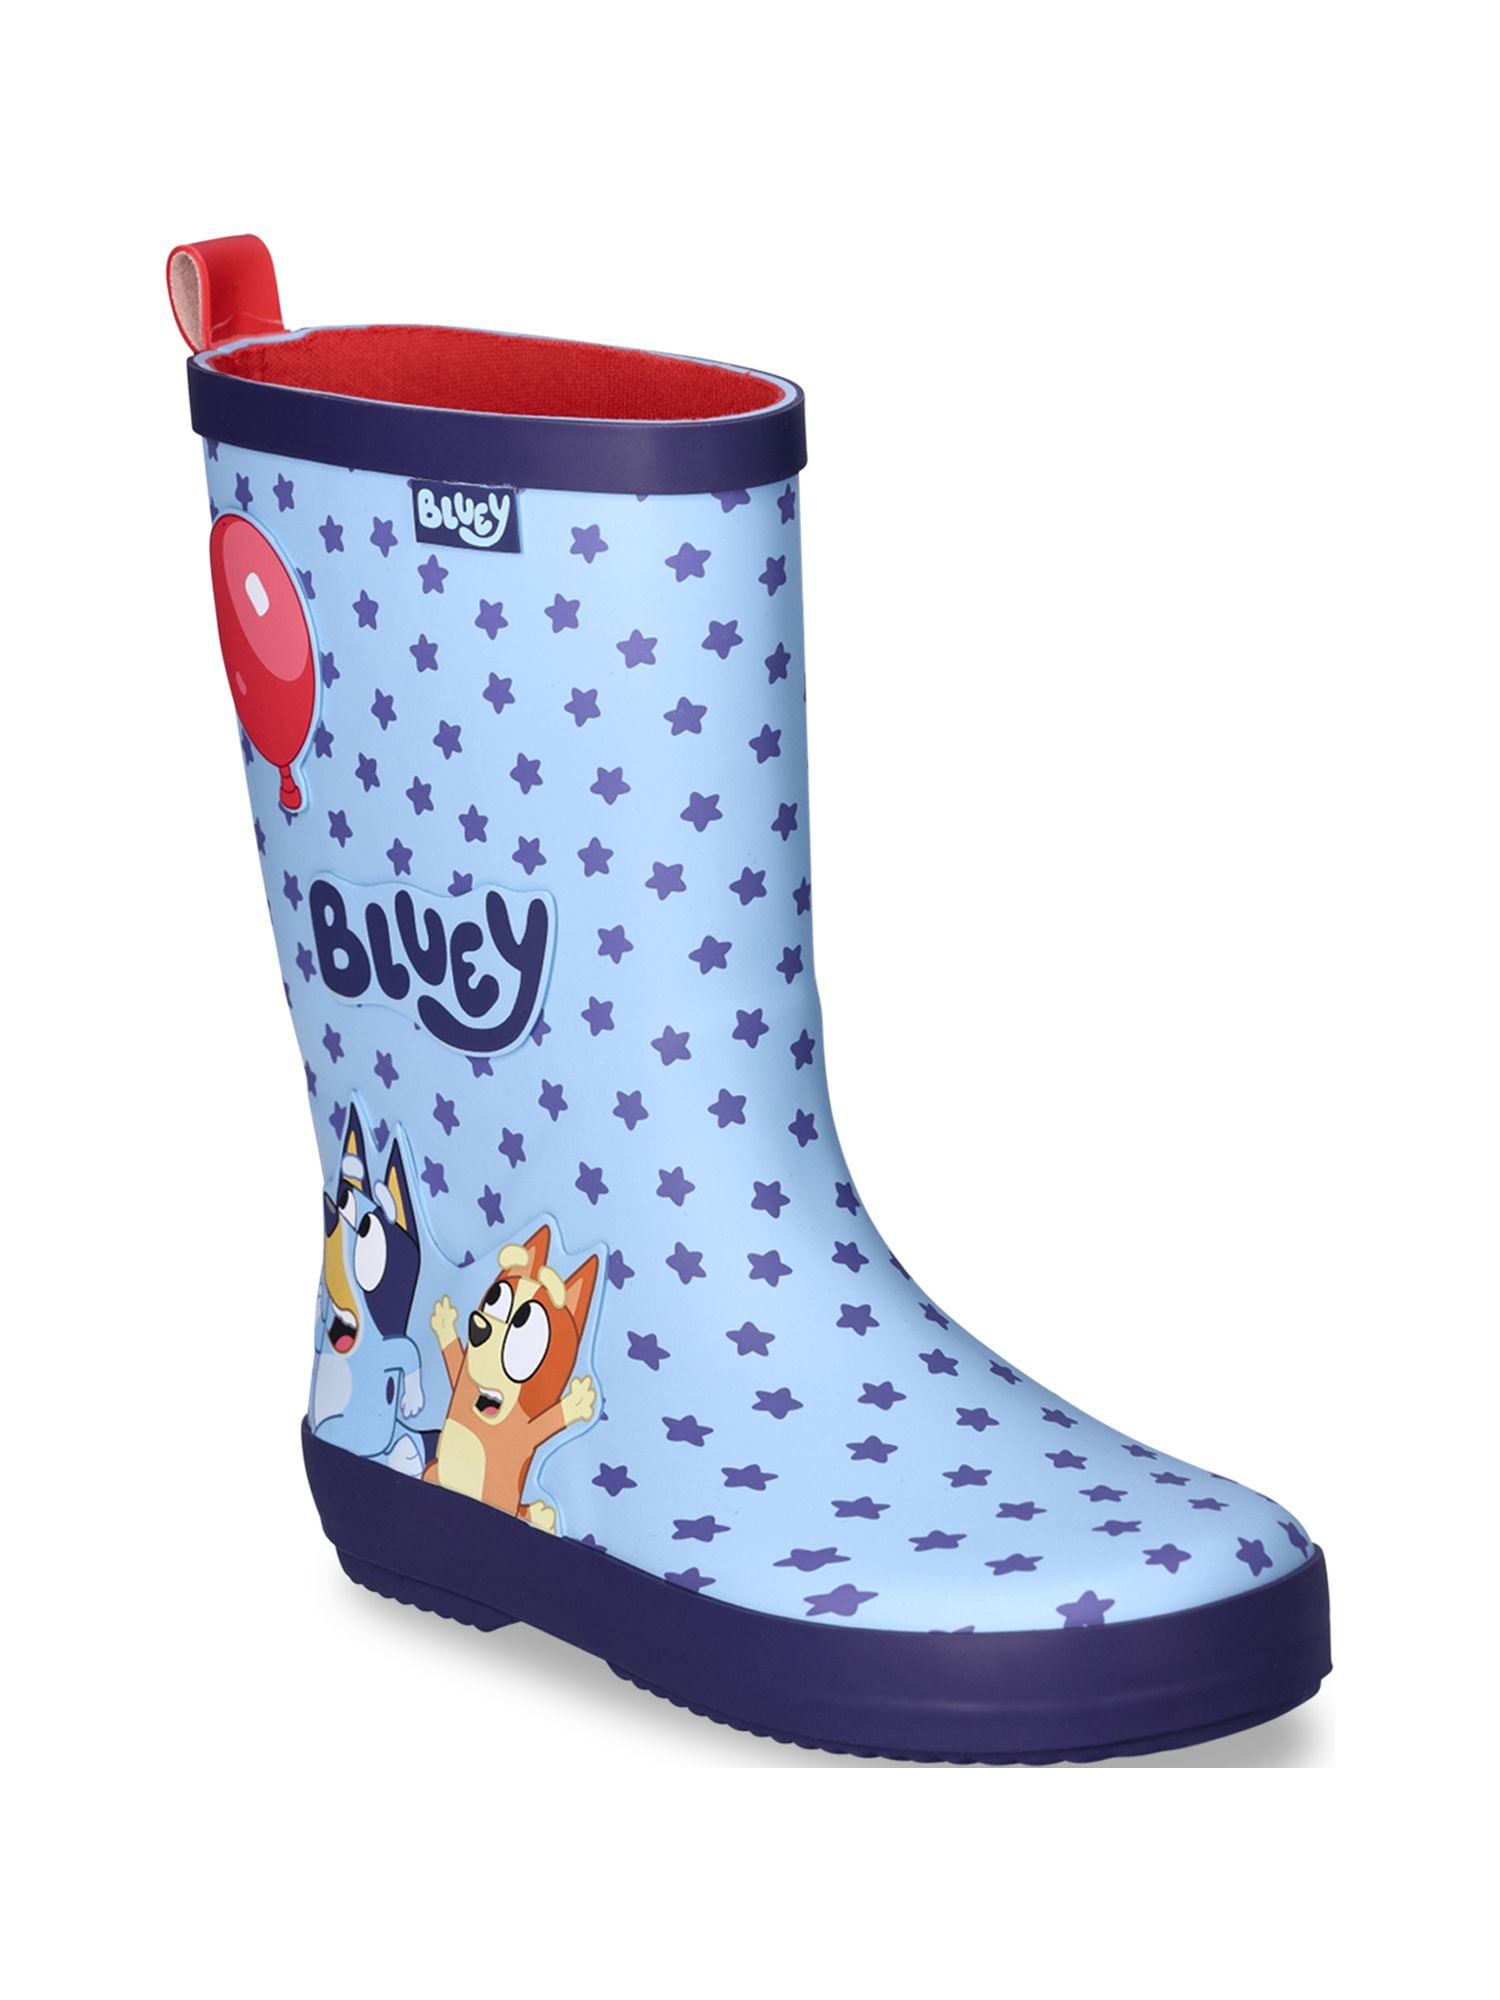 Bluey Toddler Girls Rain Boots, Sizes 5/6-13/1 - Walmart.com